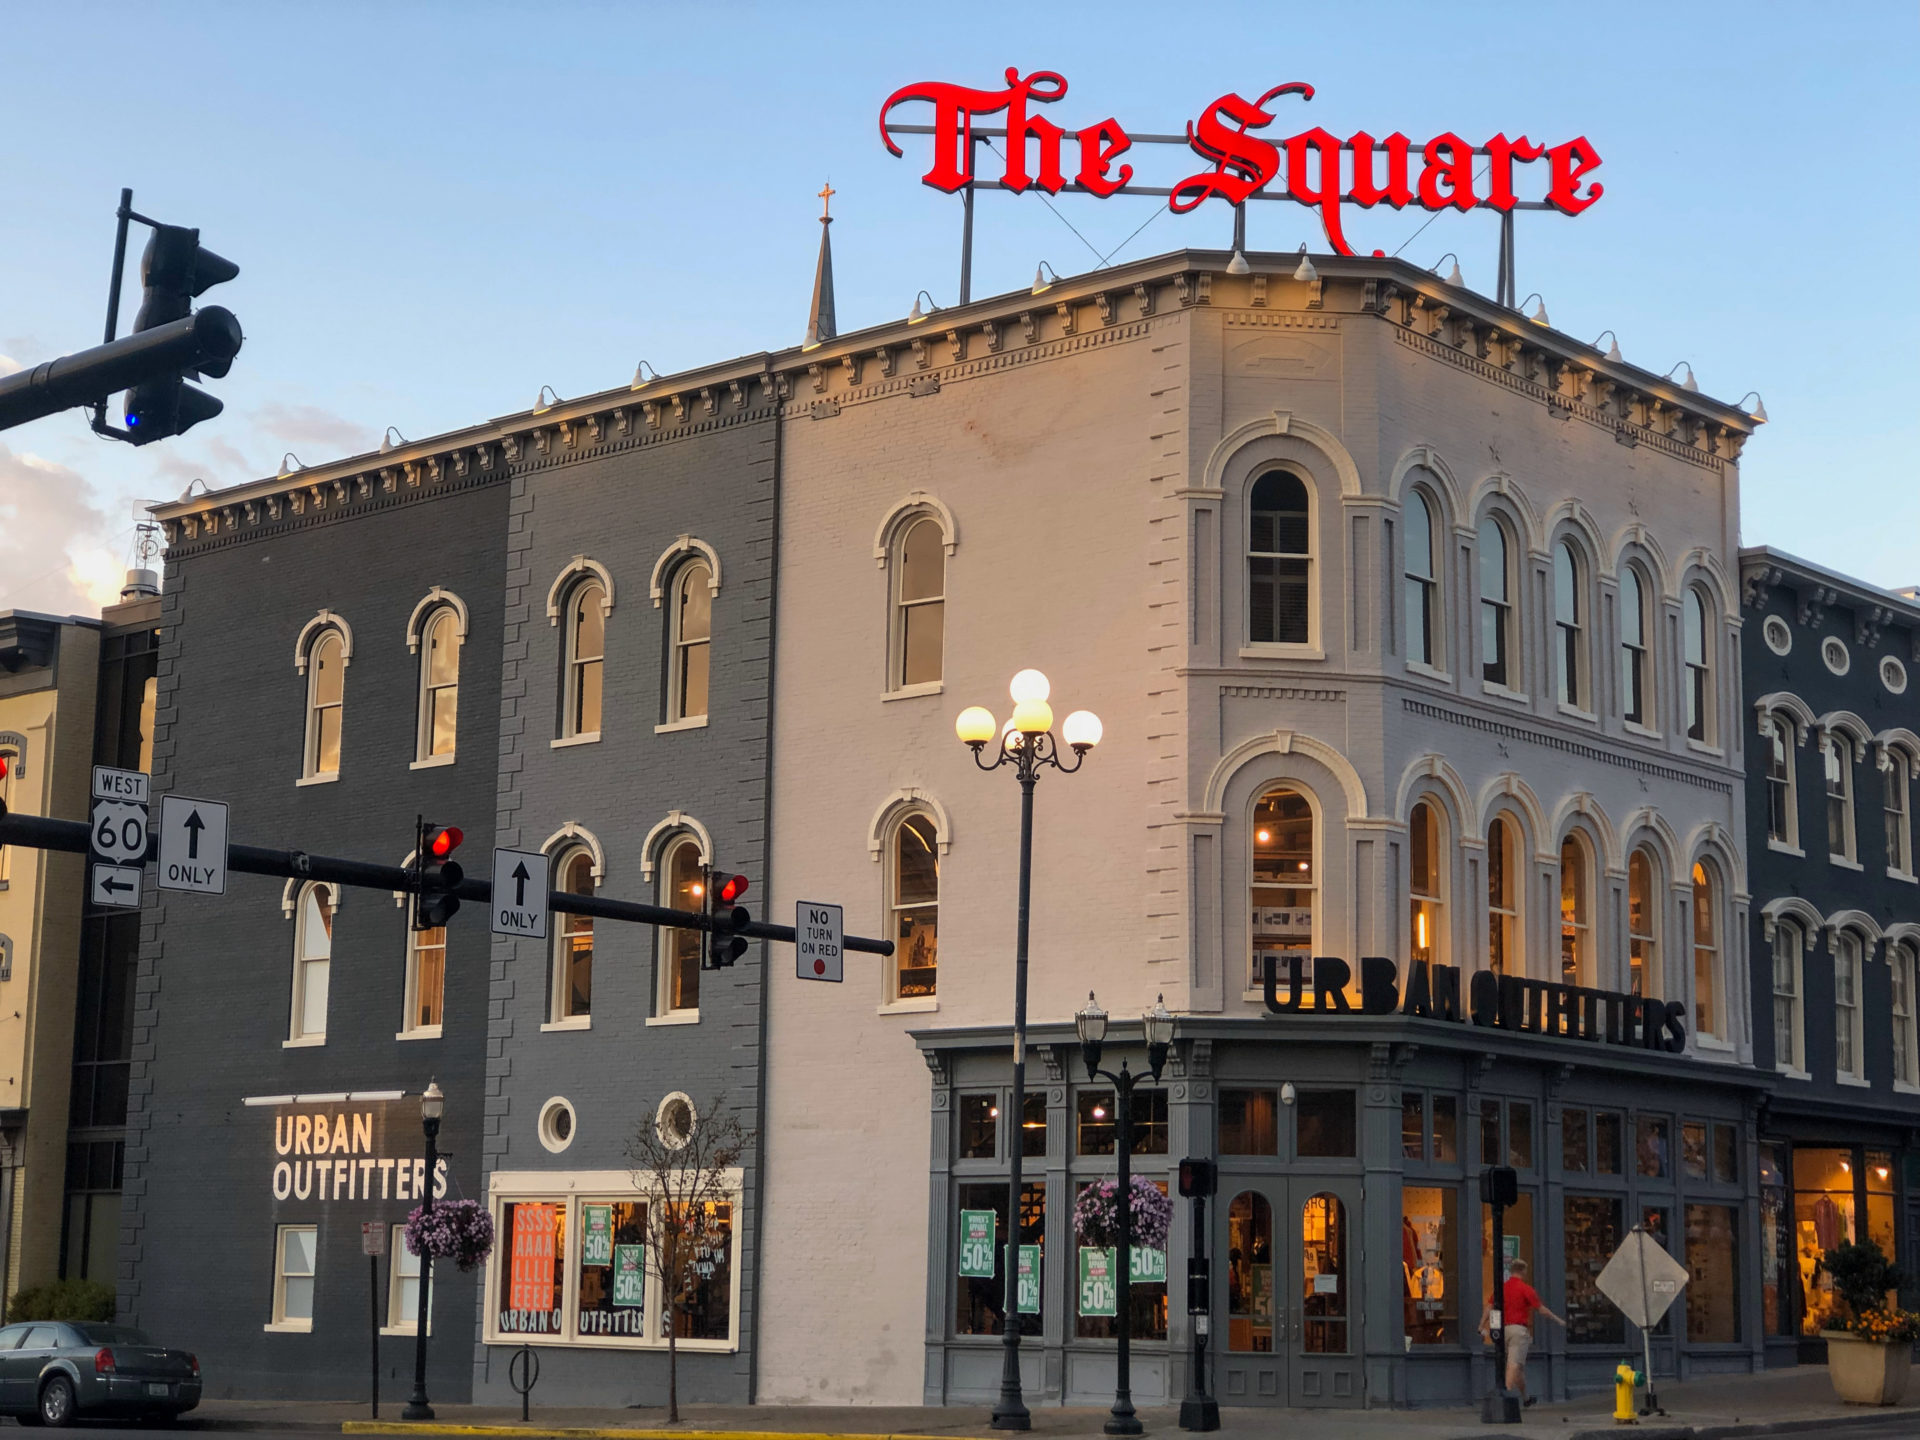 The Square in Lexington, Kentucky